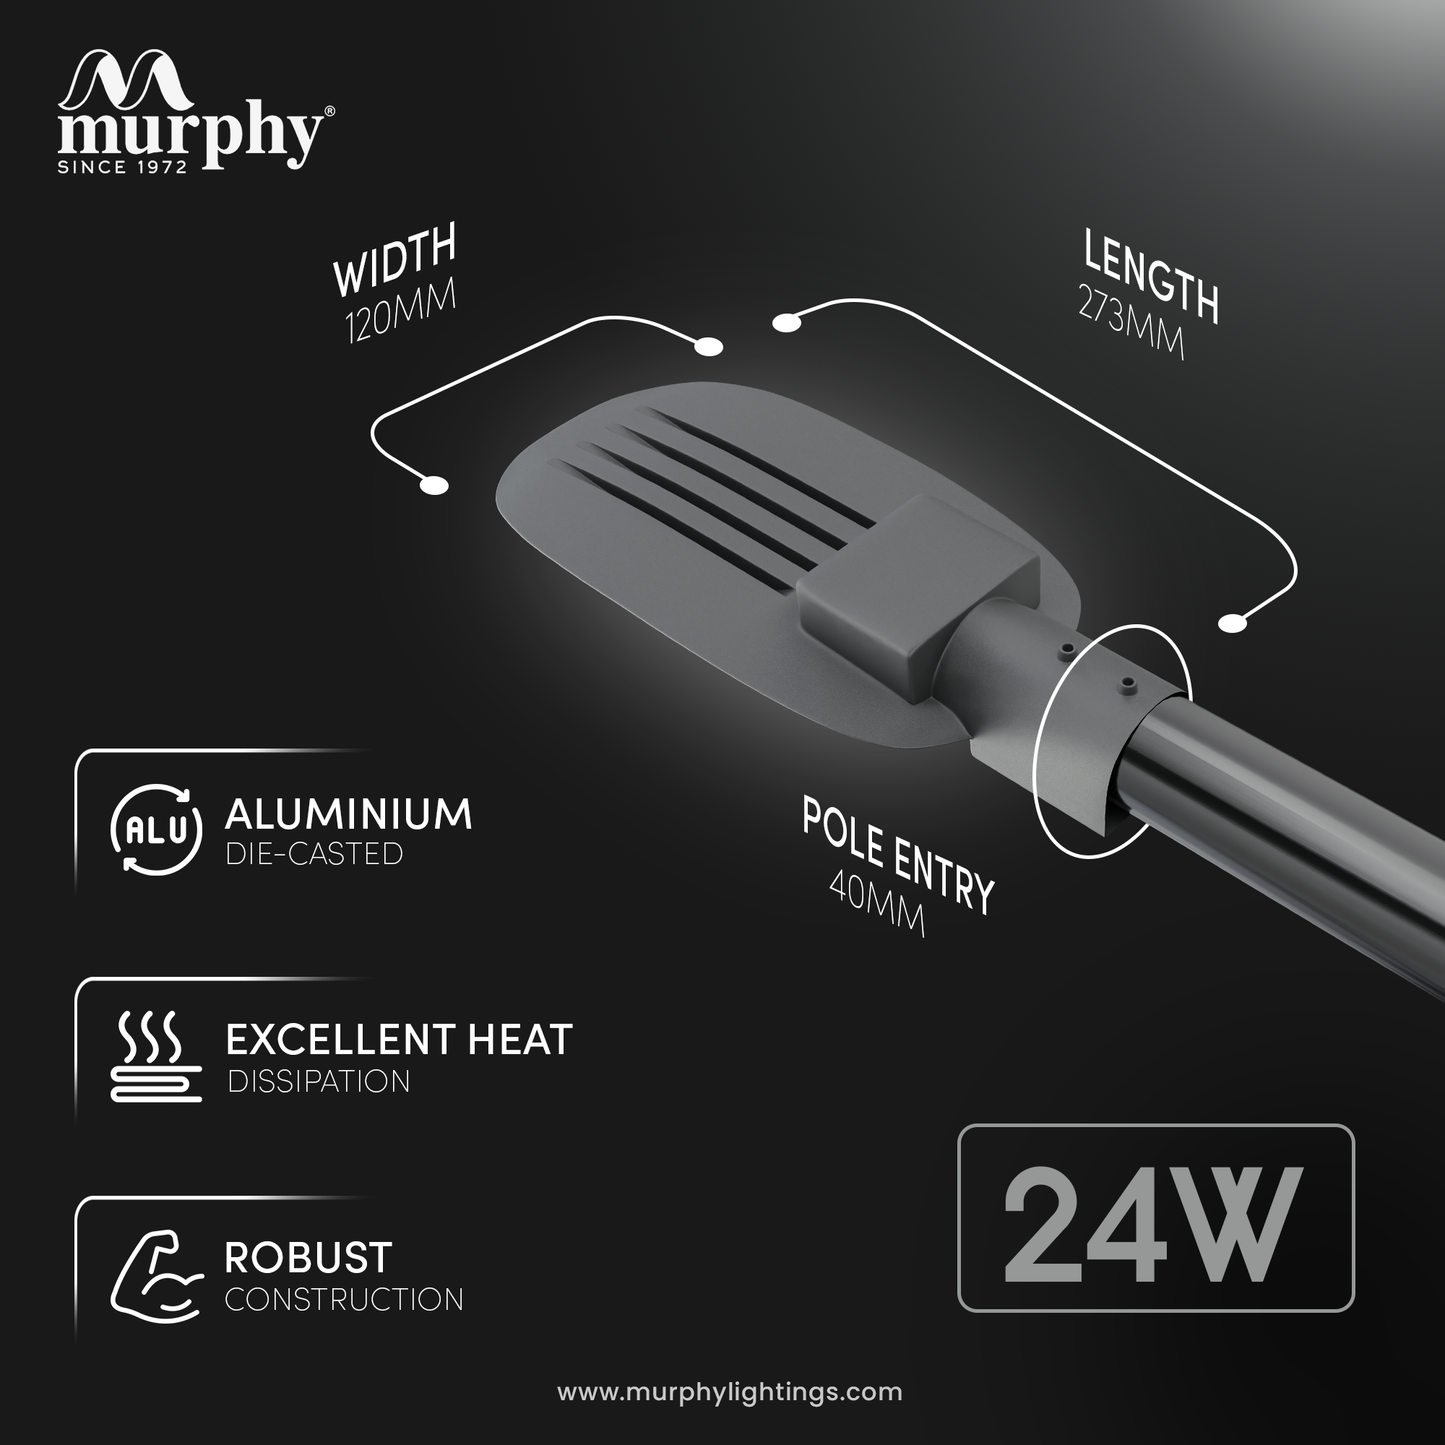 Murphy LED 24W Lenza-X Street Light With Auto On/Off Day Night Light Sensor